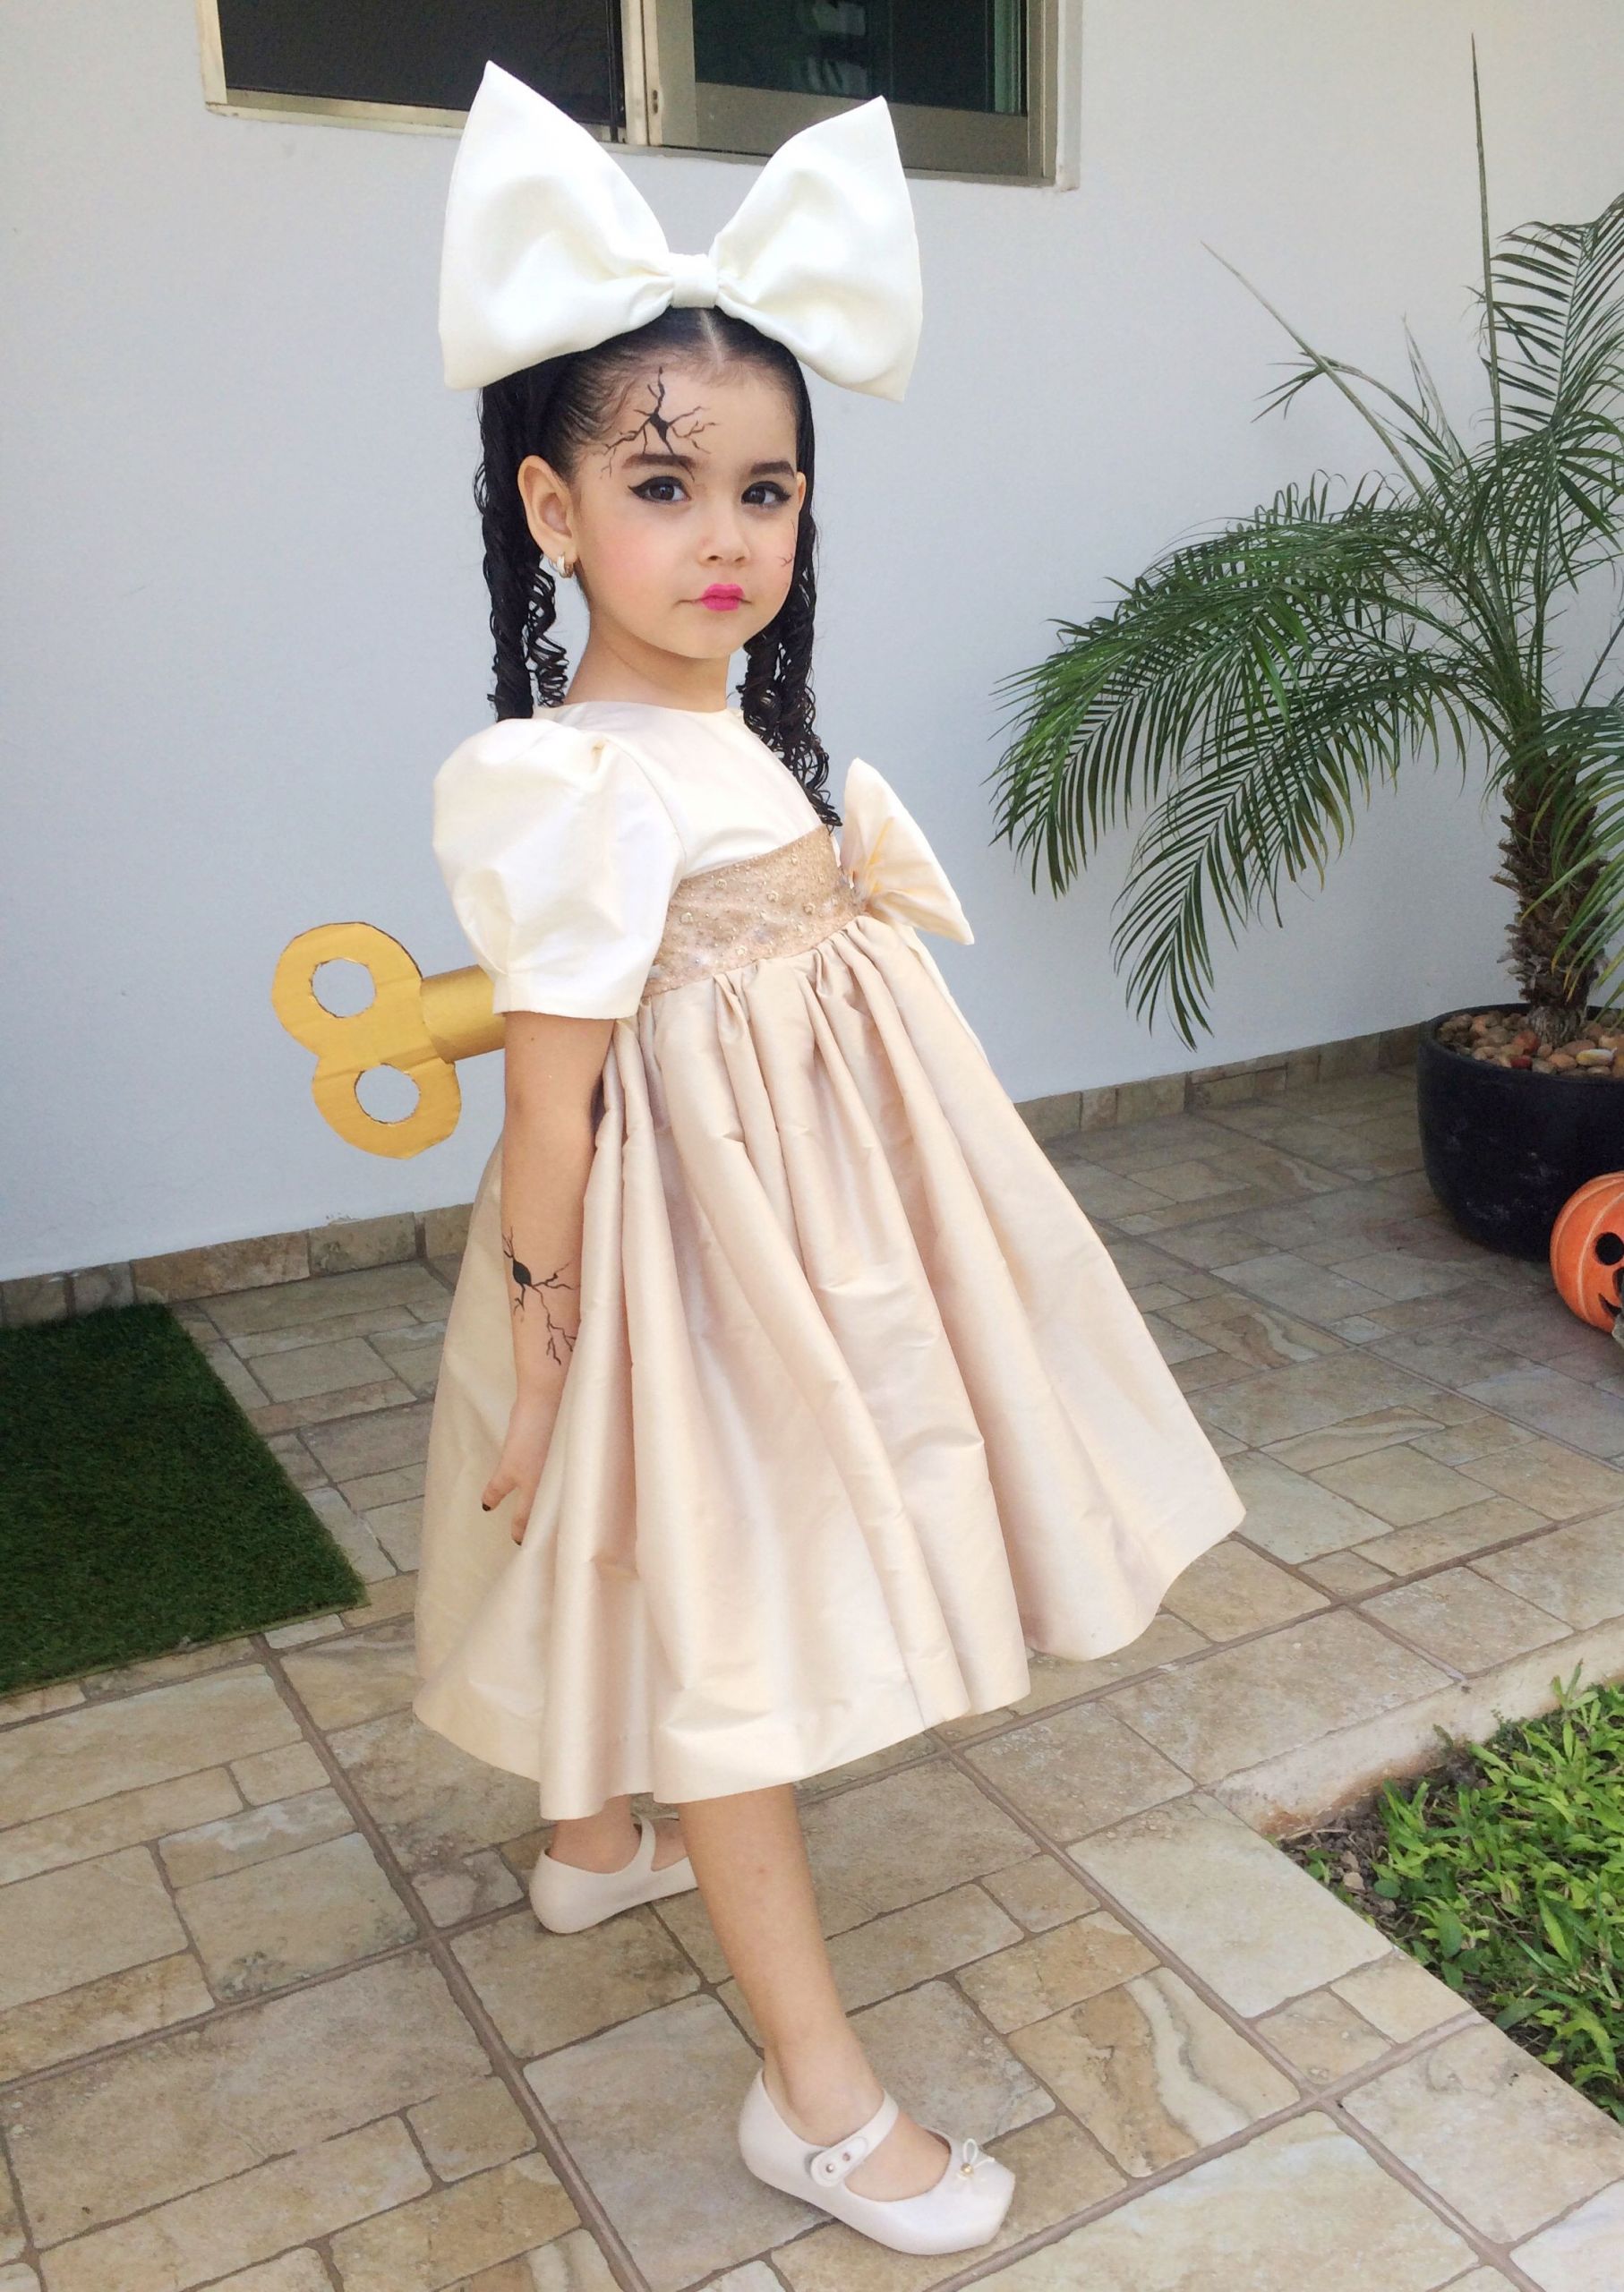 Broken Doll Costume DIY
 70 Incredibly Halloween Costumes for Kids